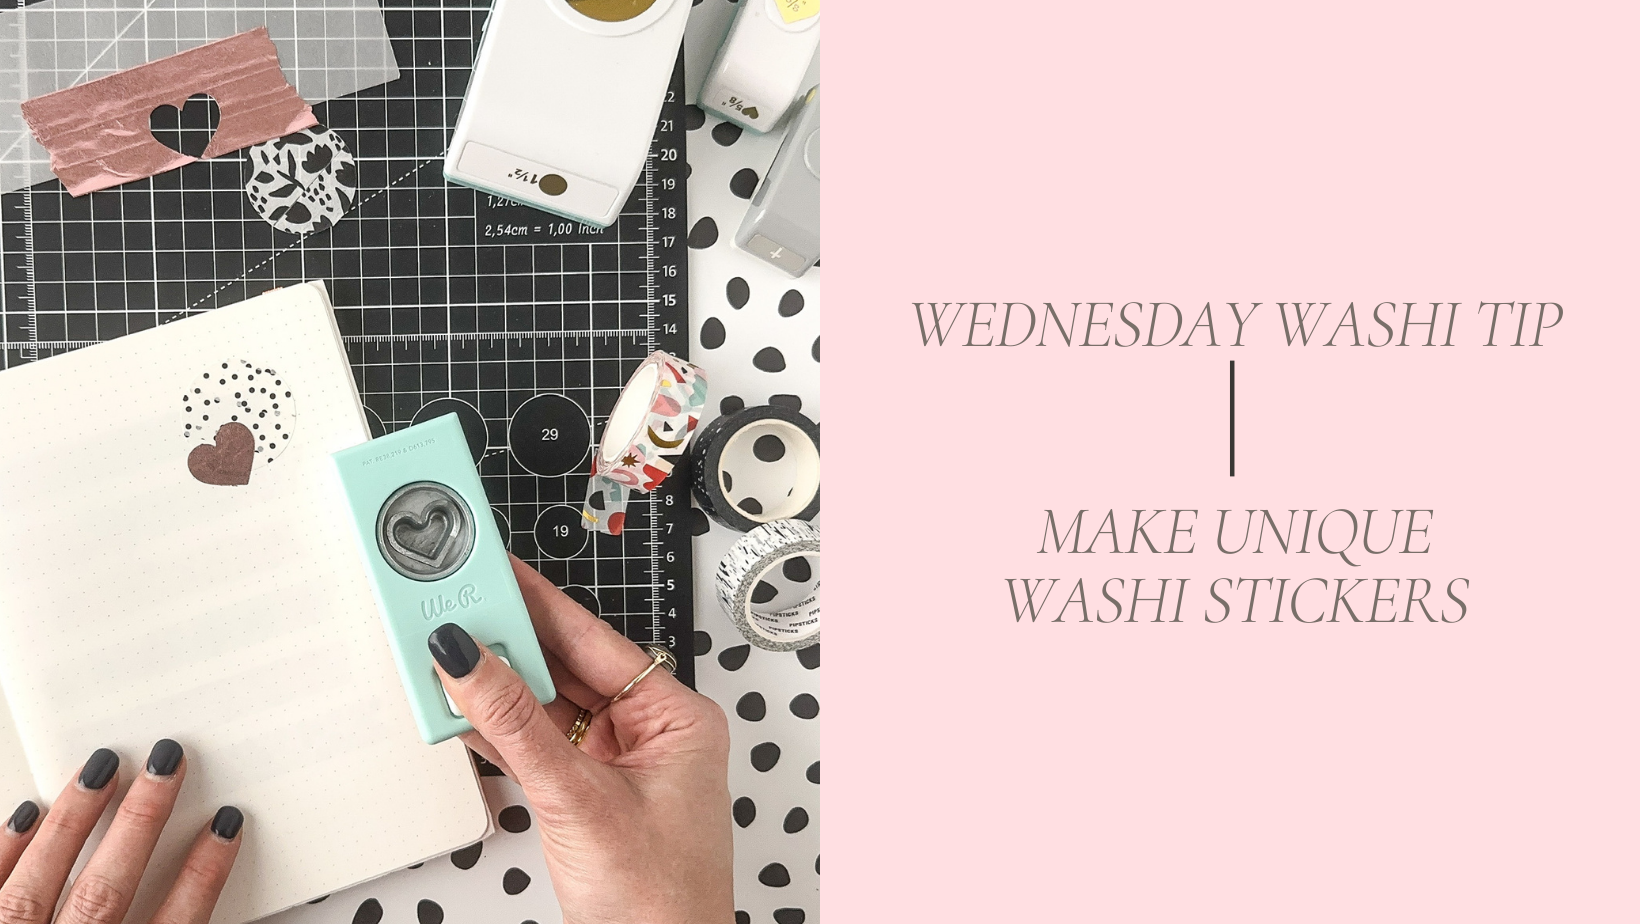 Make Washi Tape Stickers - Wednesday Washi Tip